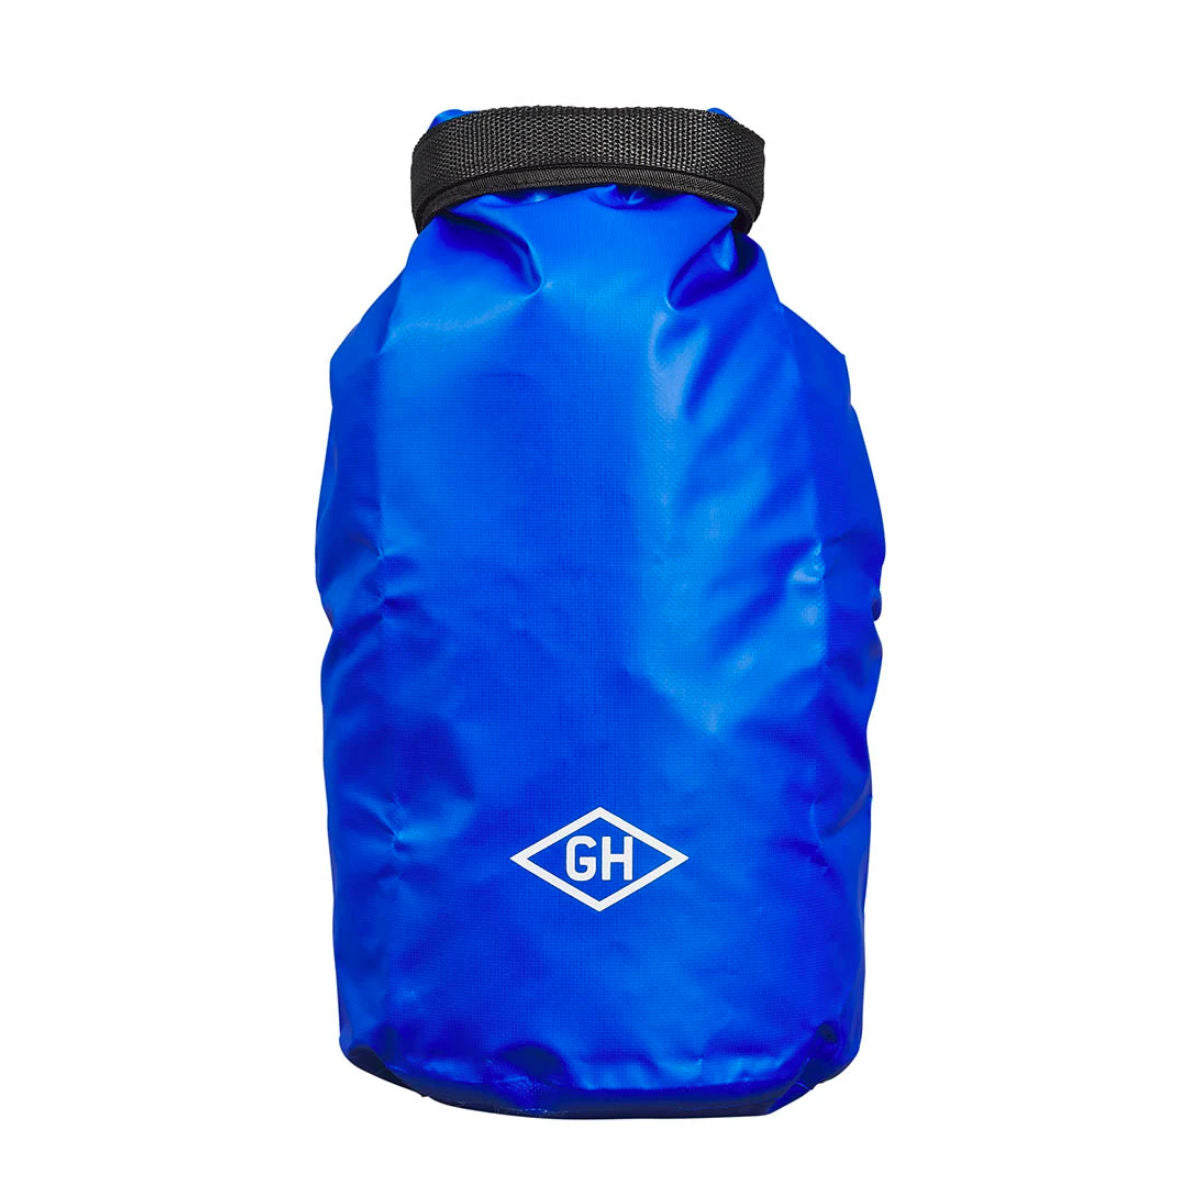 Gentelmen's Hardware Waterproof Dry Bag, blue